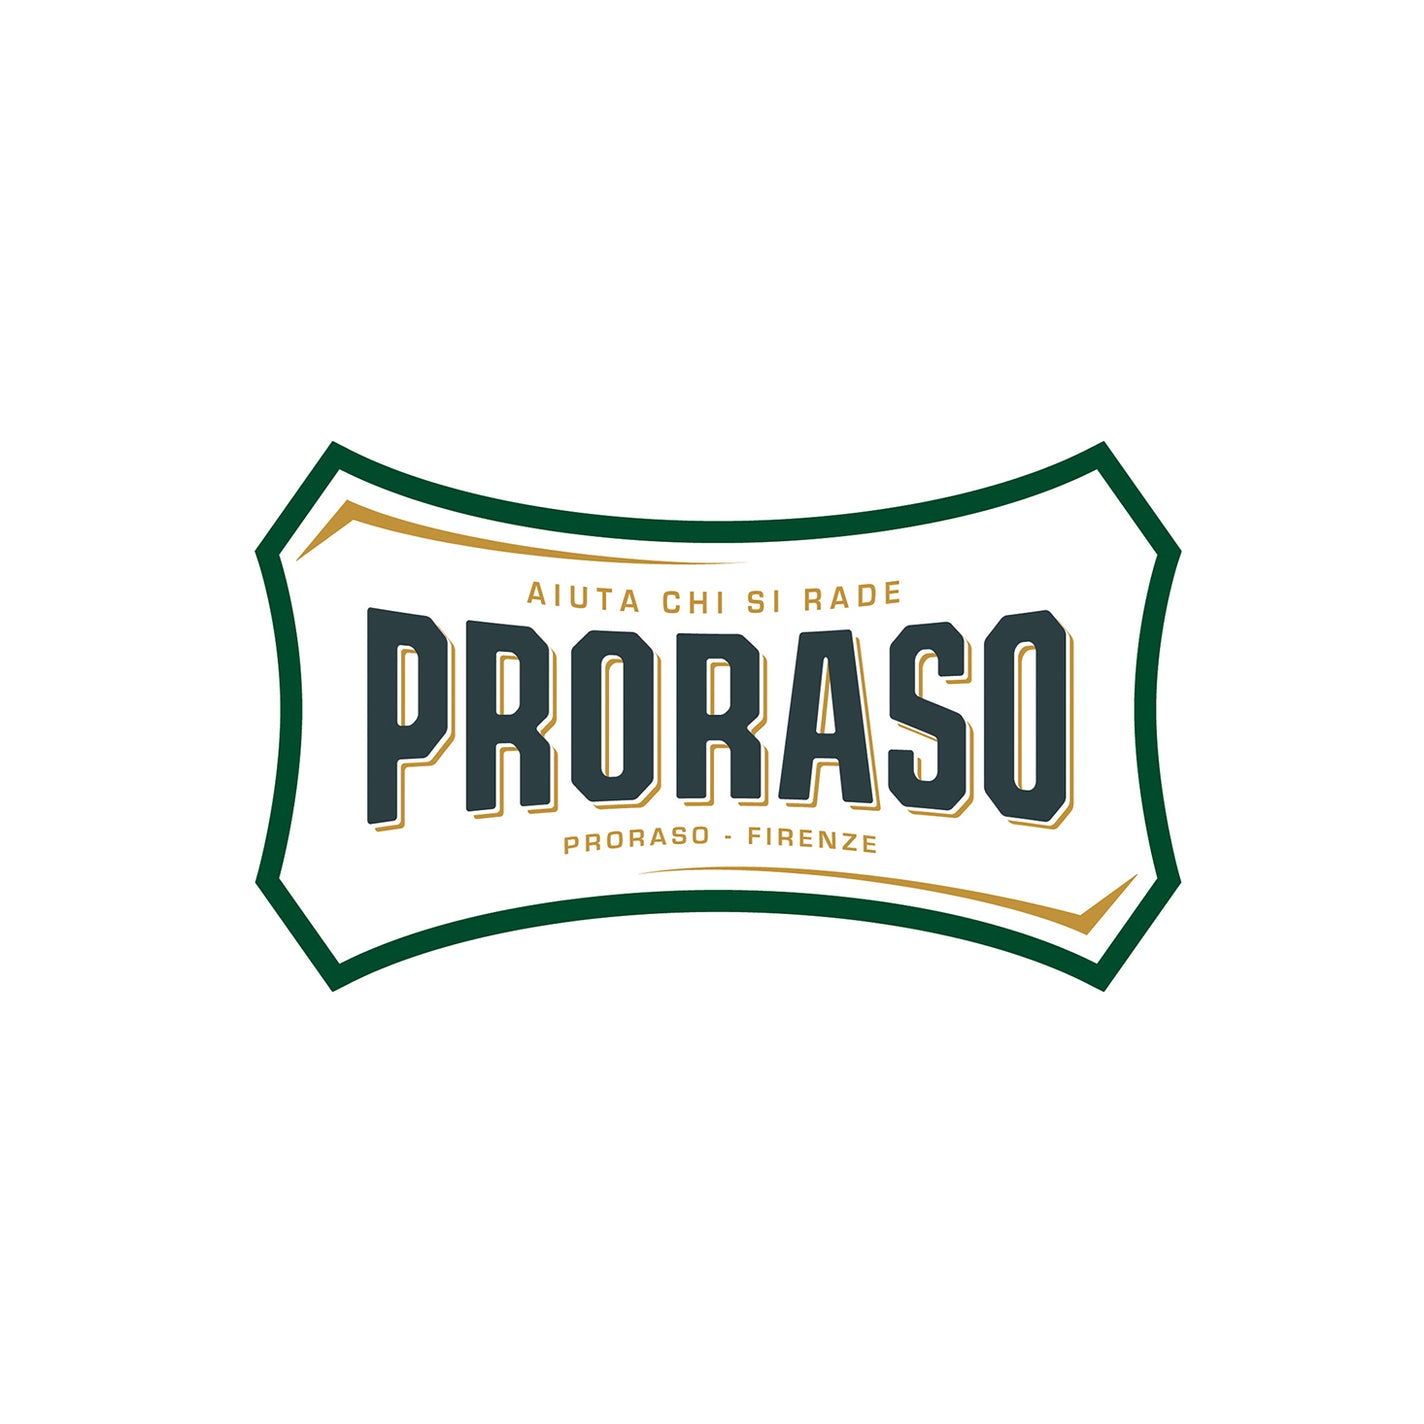 Proraso Beard Balm - Cypress + Vetiver